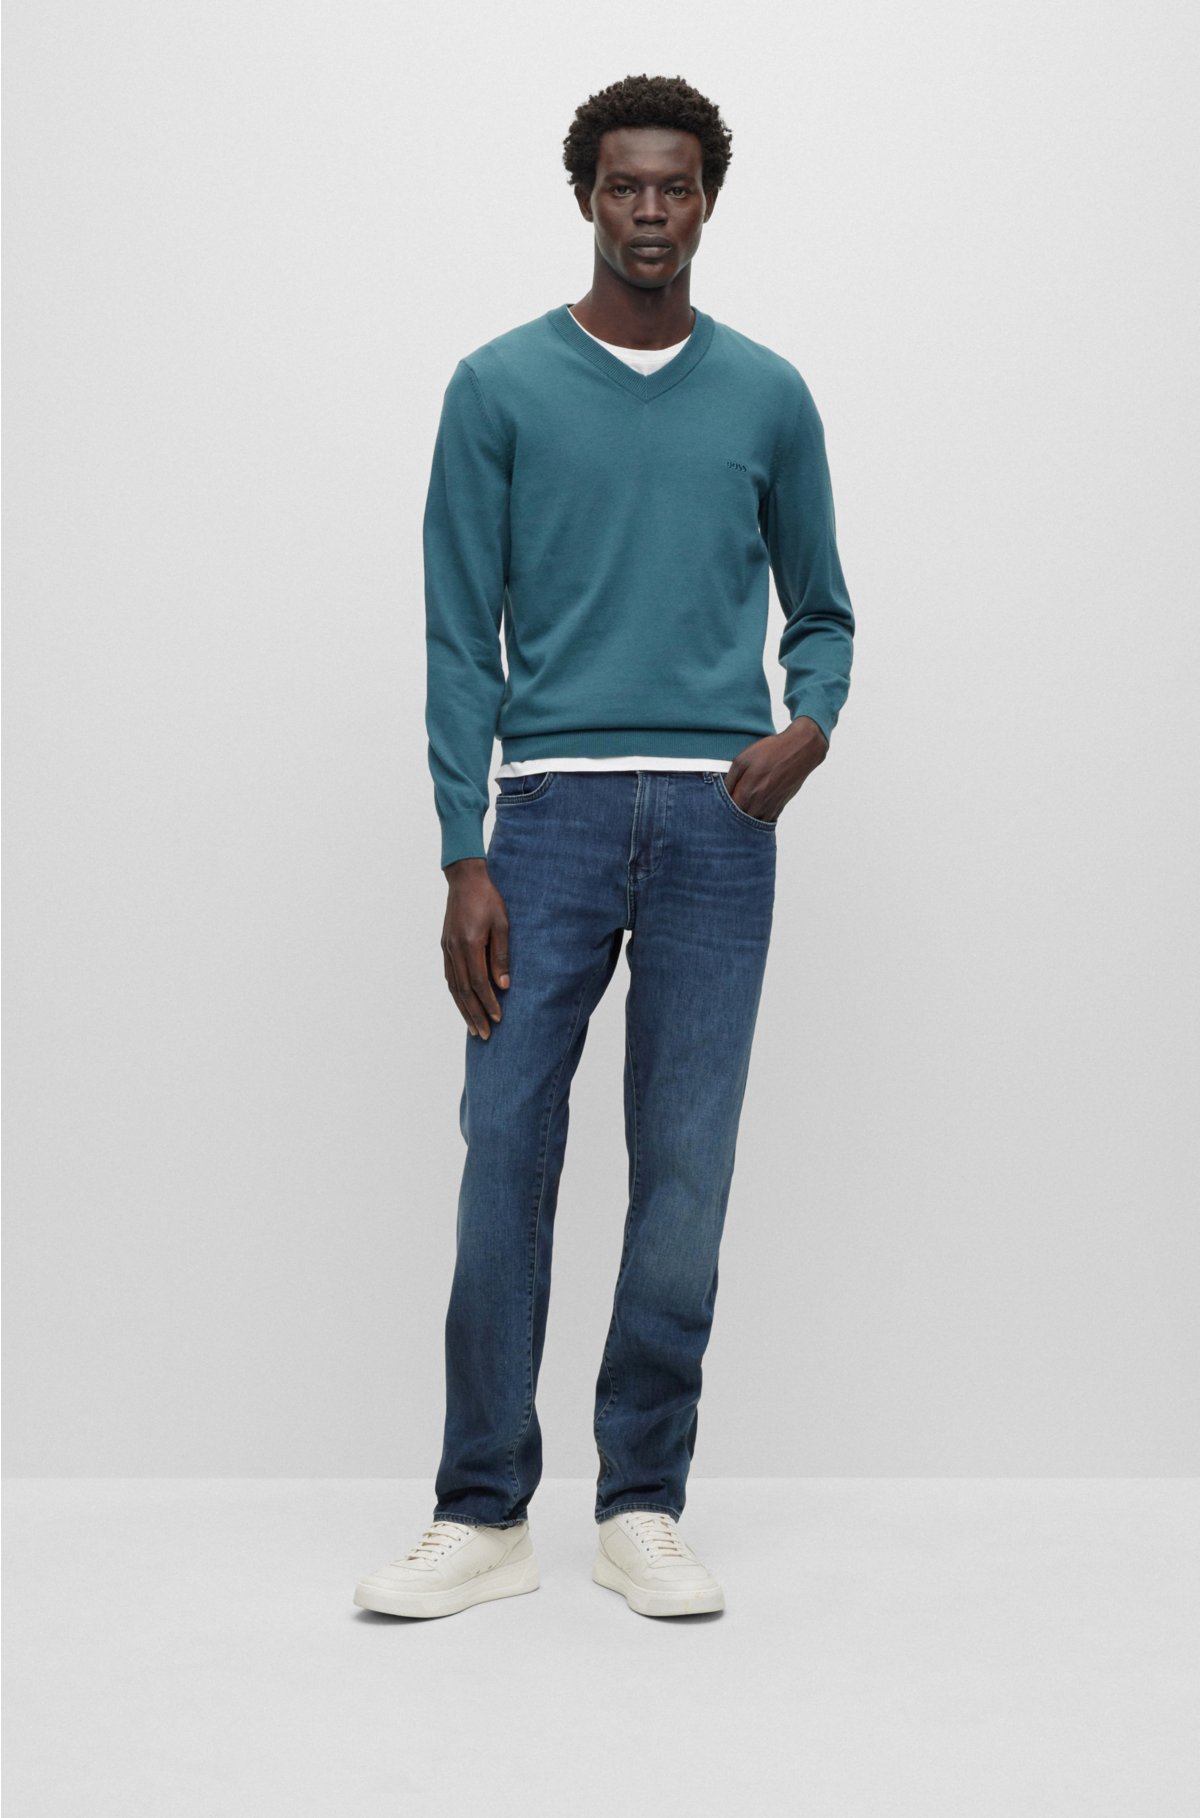 BOSS - Slim-fit jeans in lightweight blue stretch denim